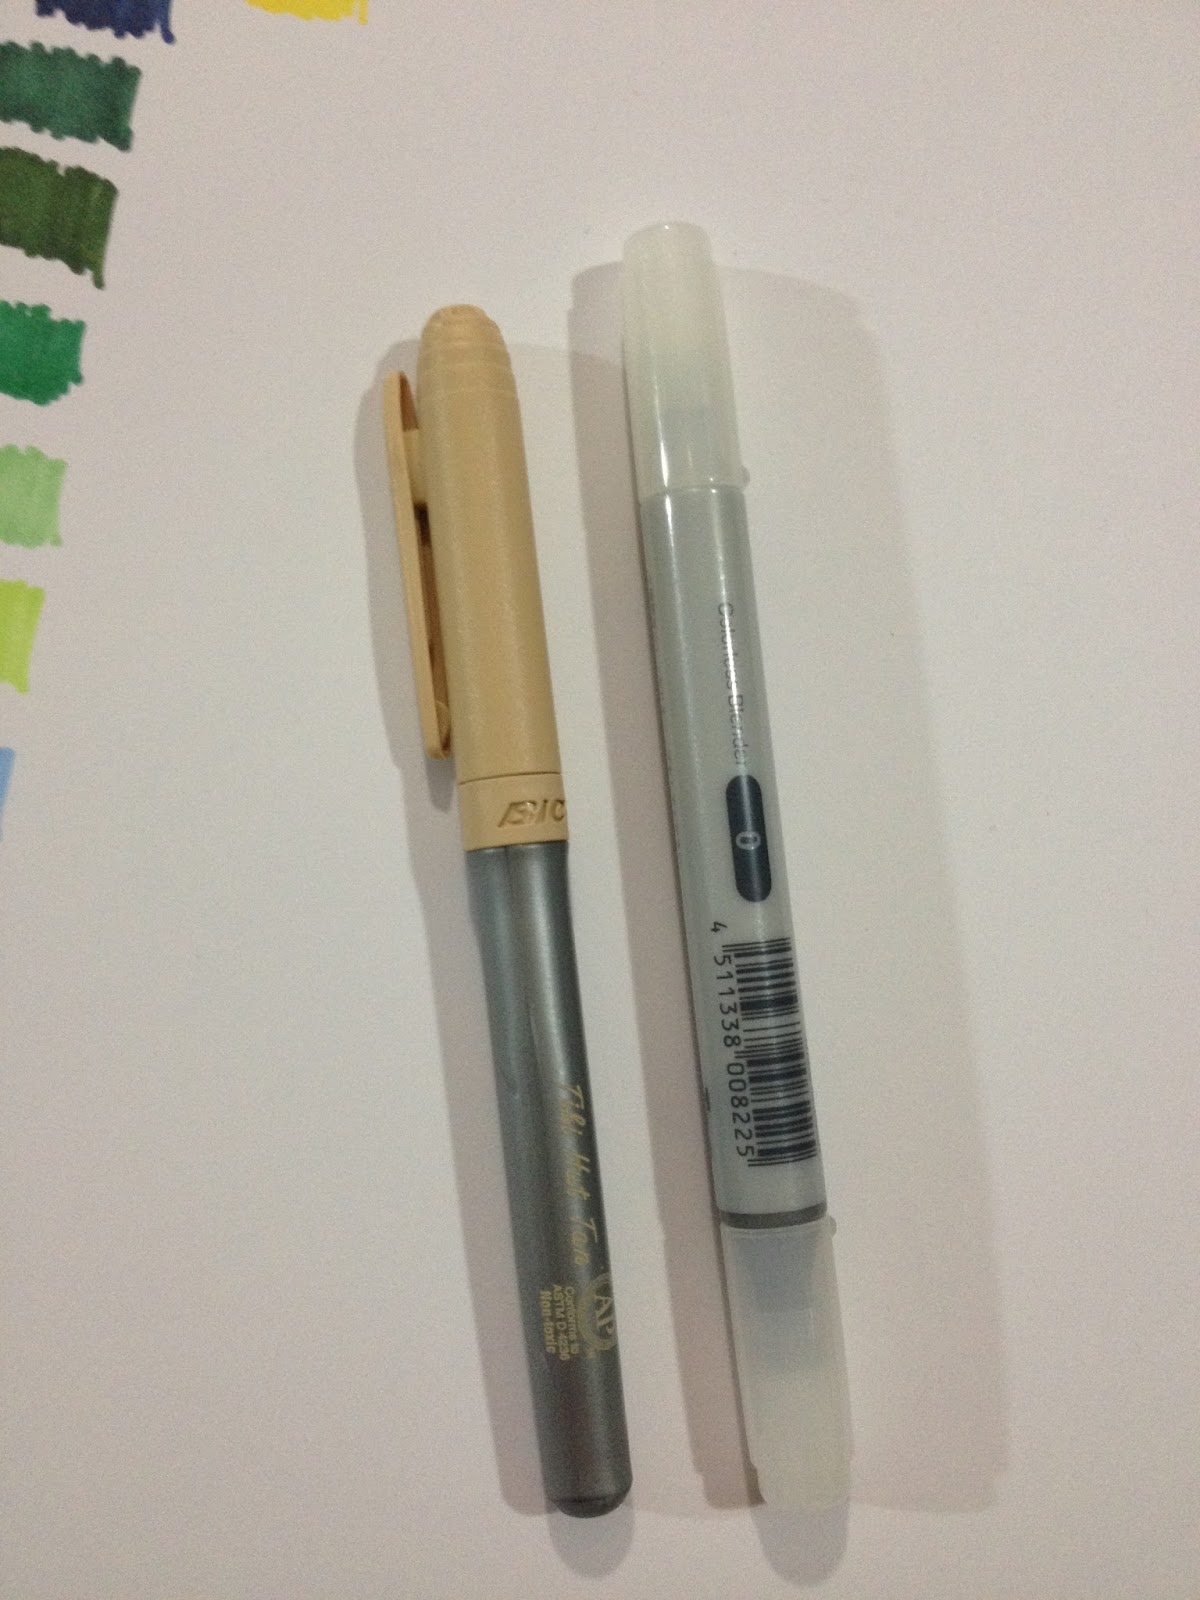 Glitter Metallic Paint Pens, Sparkle Water-Based Markers Pen, 12 Assorted  Colors Pen Set for Gr - Art Pens & Markers, Facebook Marketplace